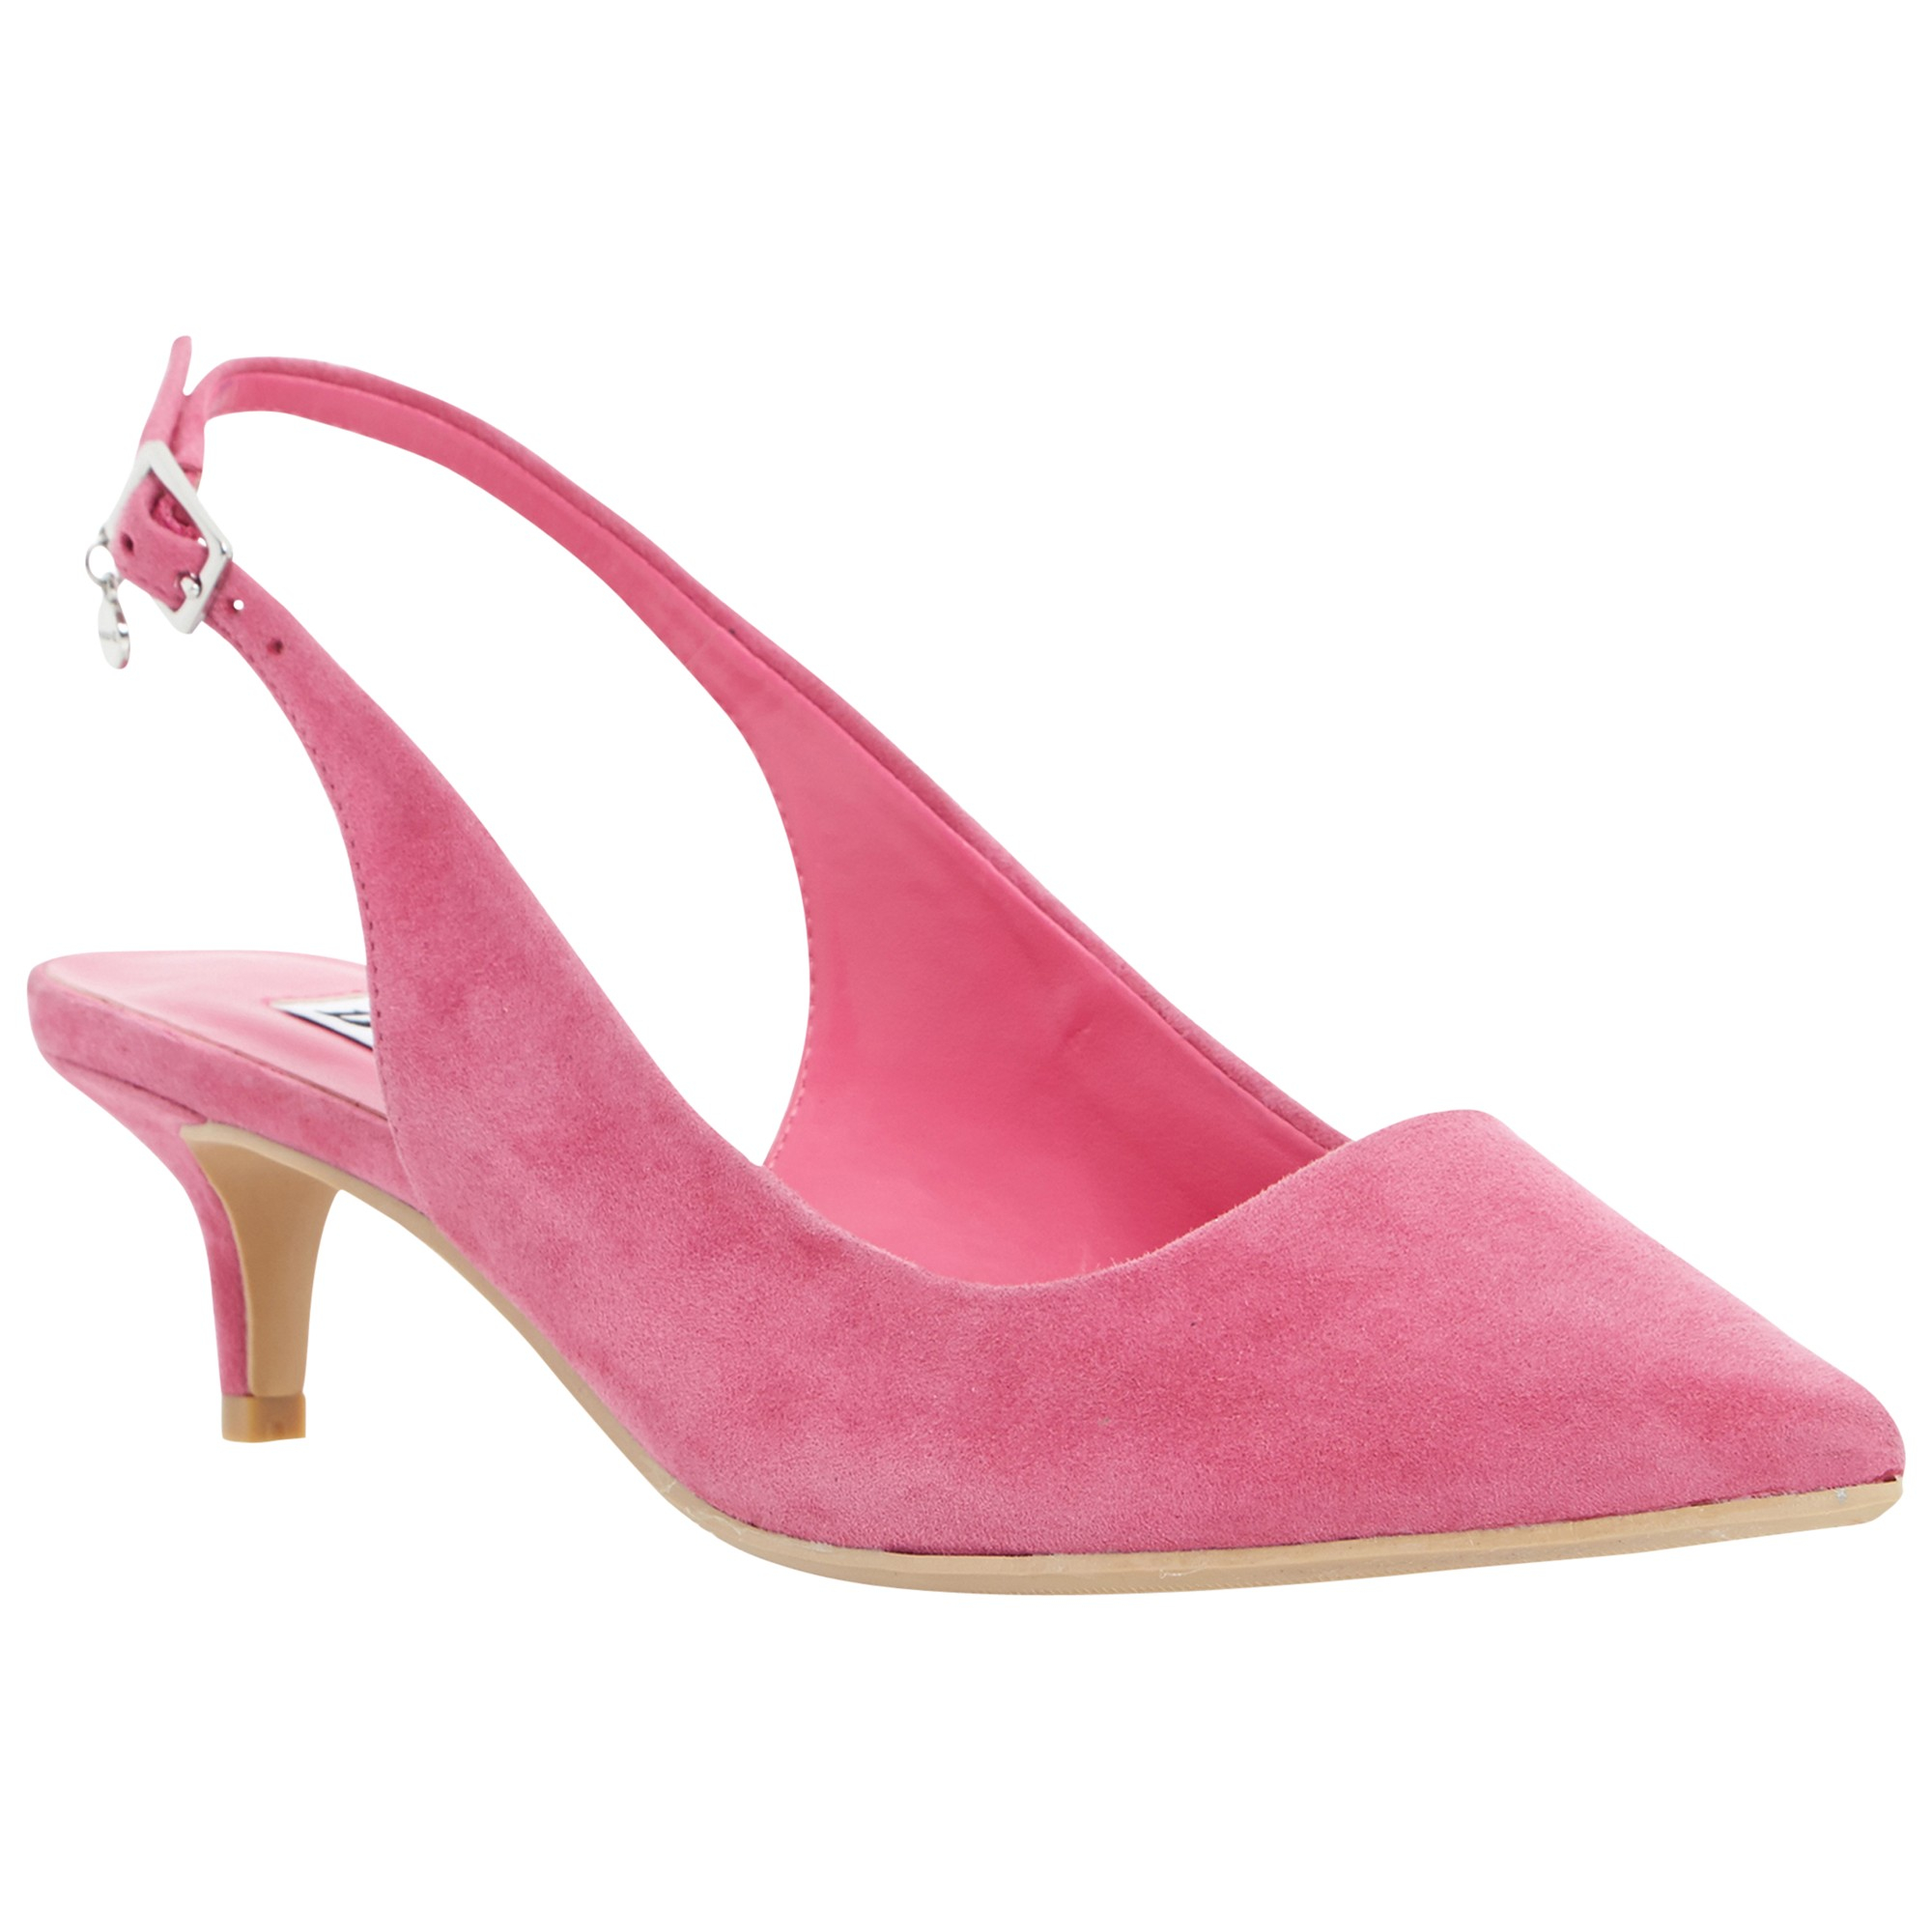 Dune Cathryn Slingback Kitten Heel Court Shoes in Pink - Lyst